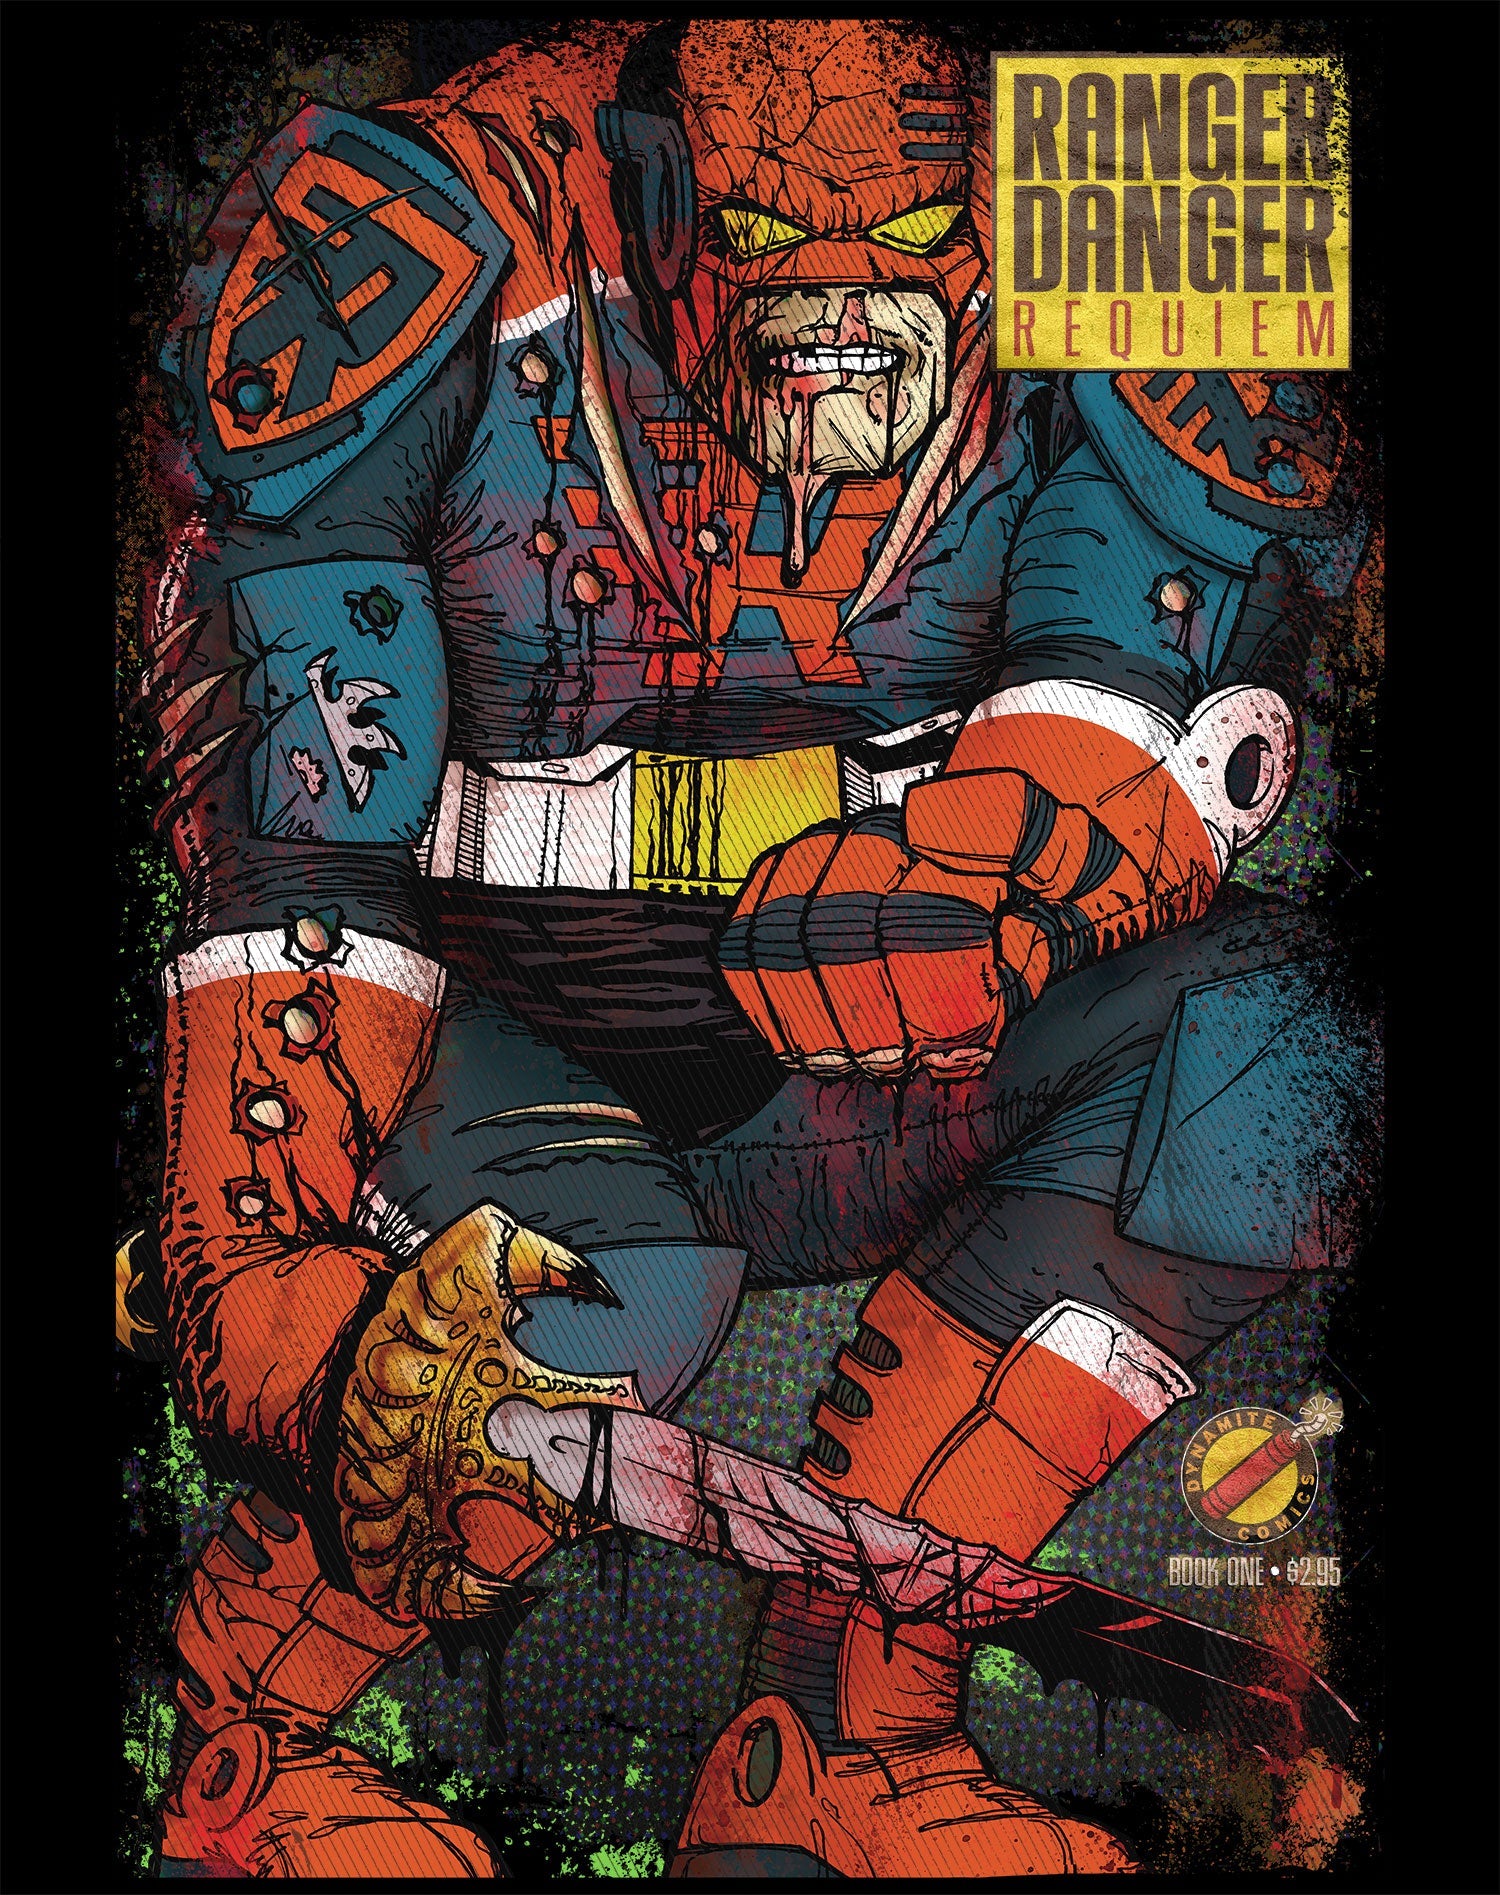 Kevin Smith Jay & Silent Bob Reboot Ranger Danger Requiem Comic LDN Variant Official Sweatshirt